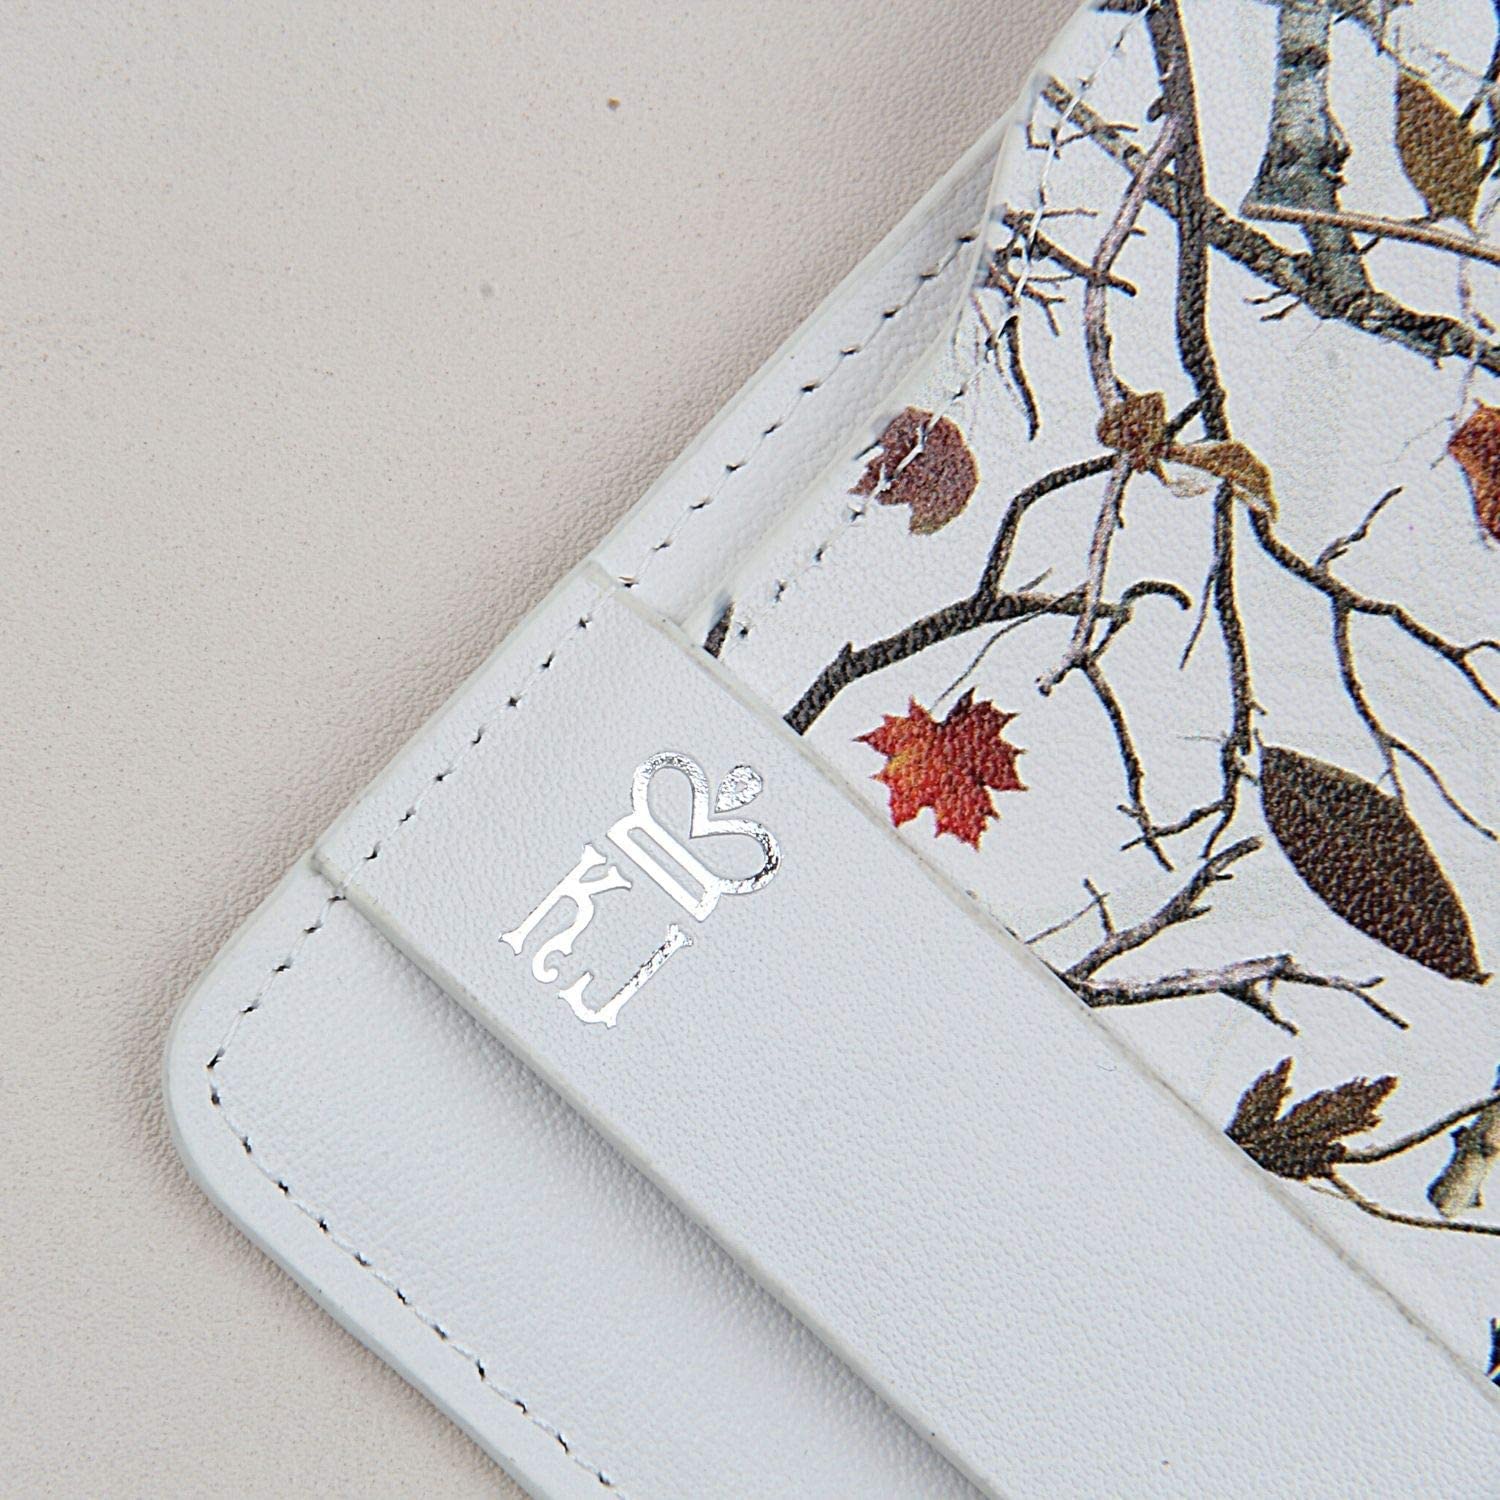 White Camo Wallet Leather Minimalist Wallet Unique Camouflage Design